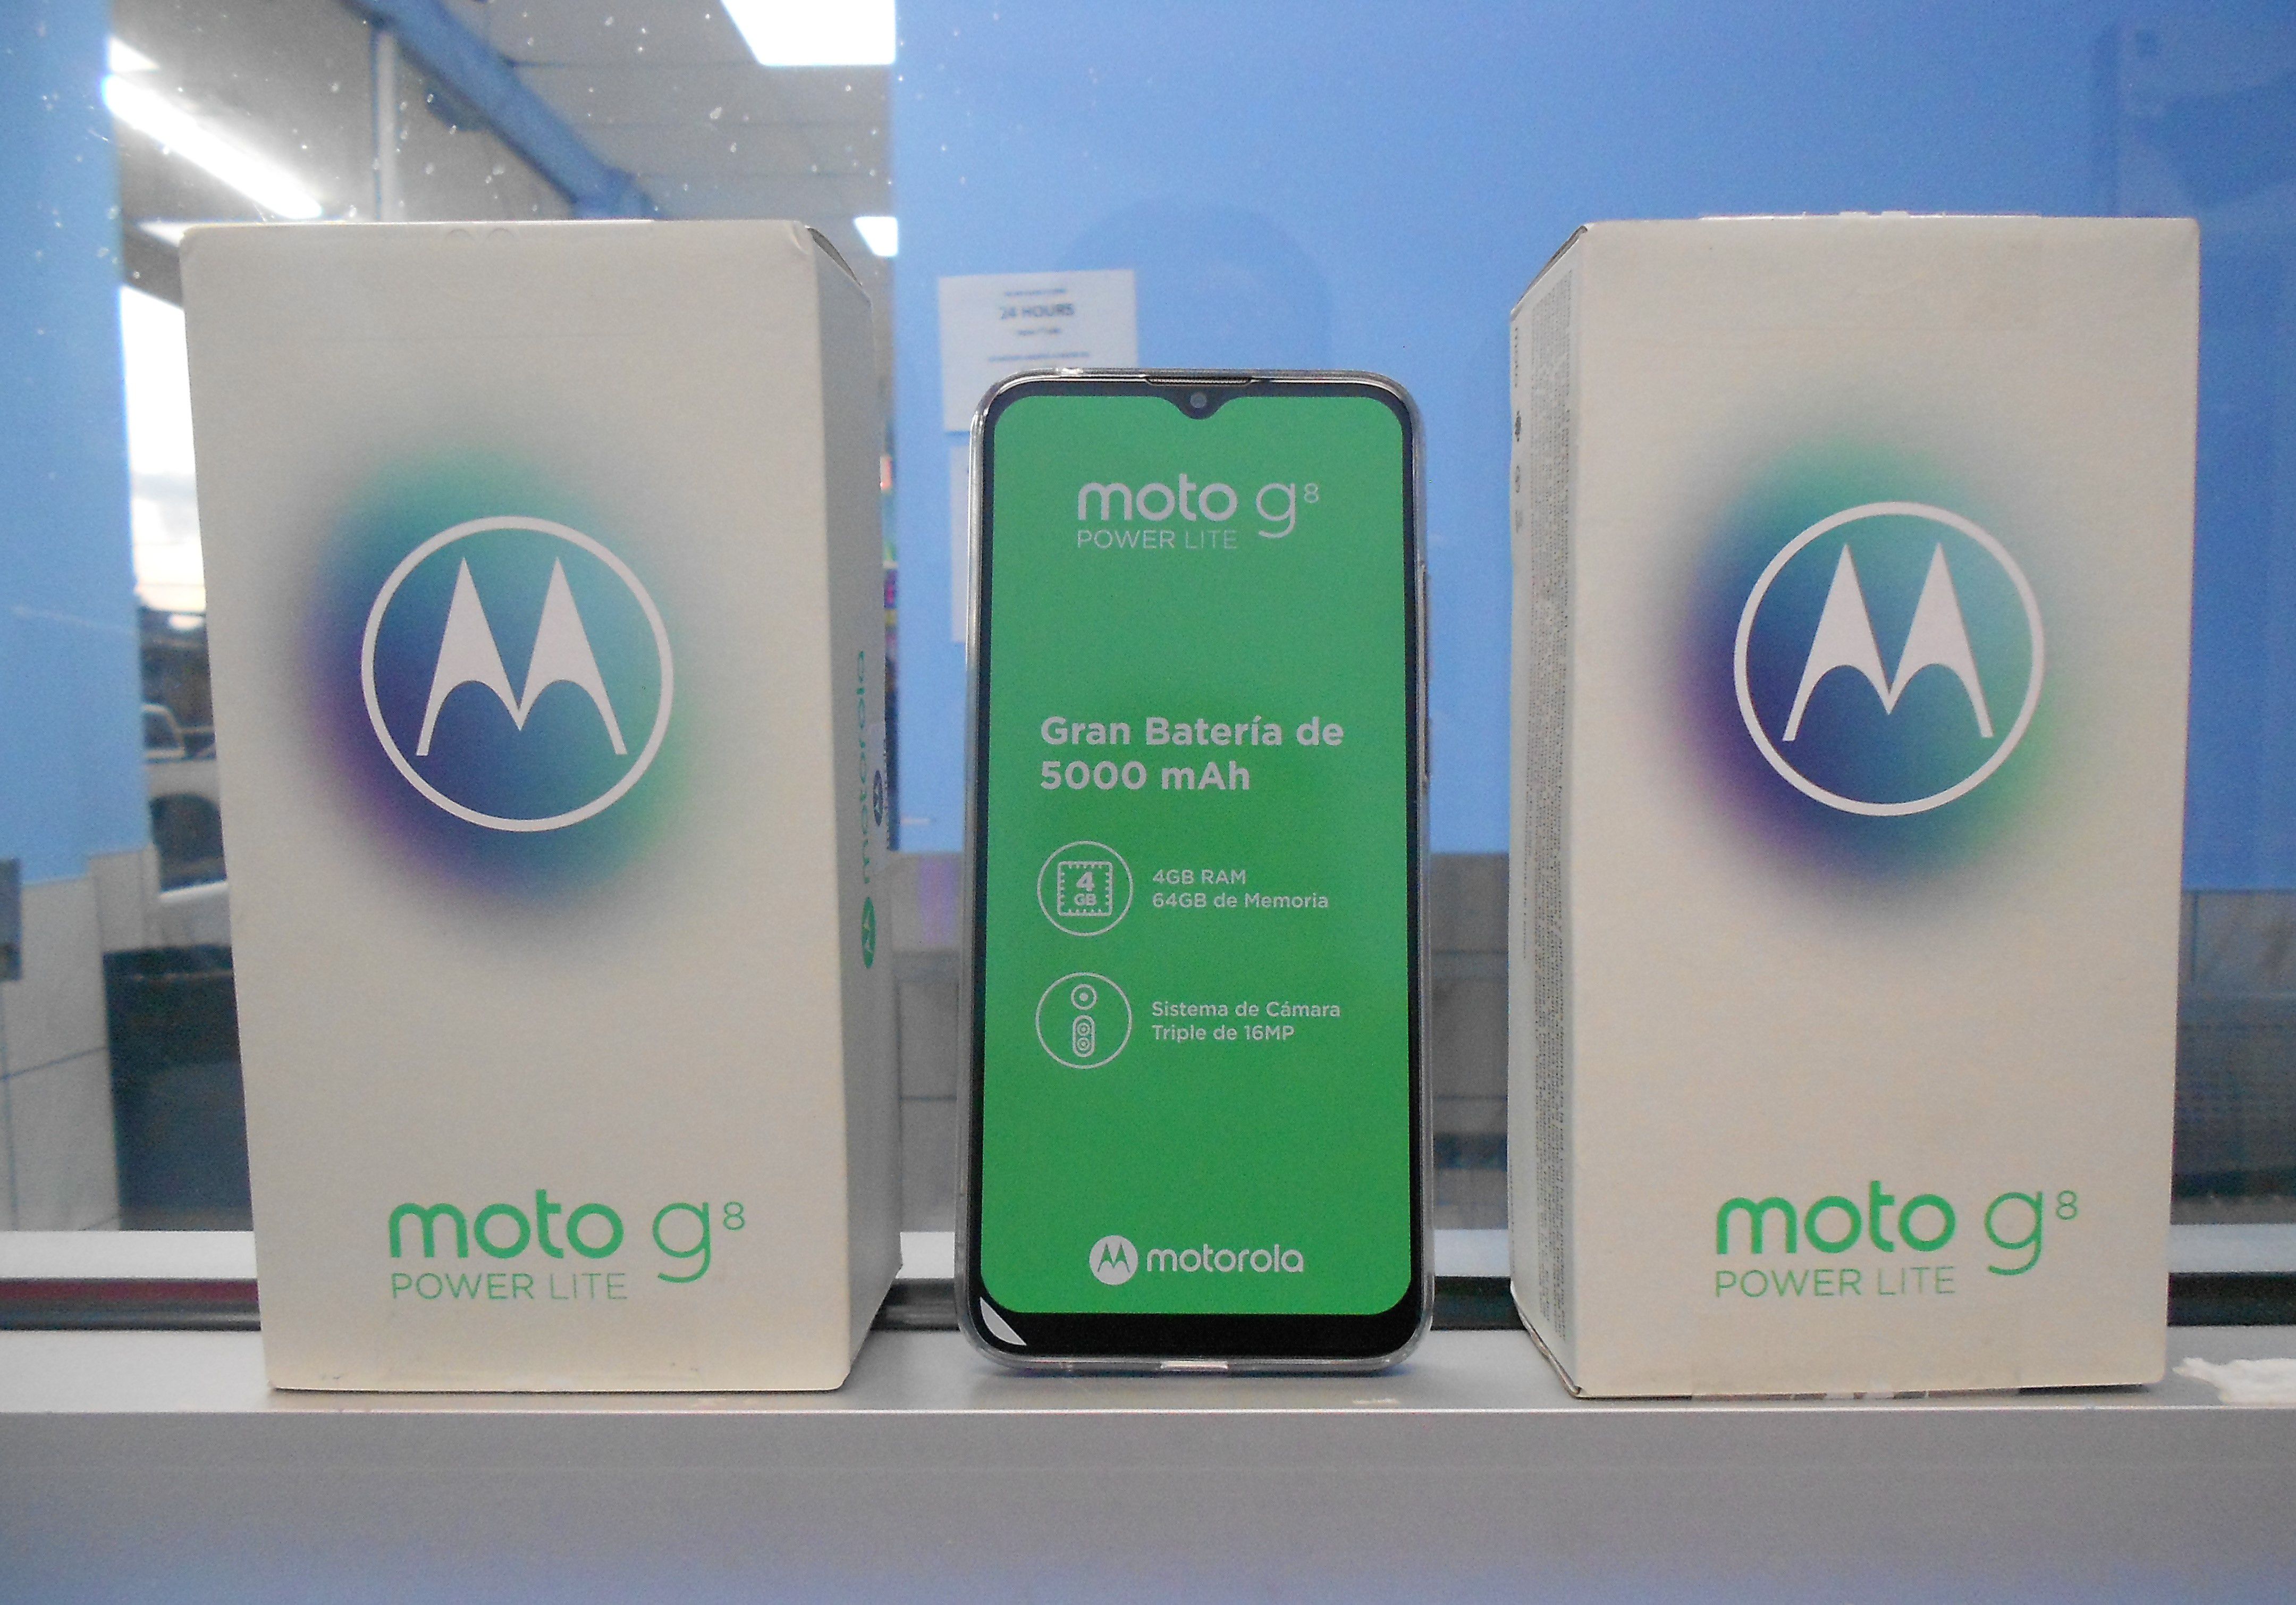 Motorola Moto g8 Power Lite 4+64GB CellPhone